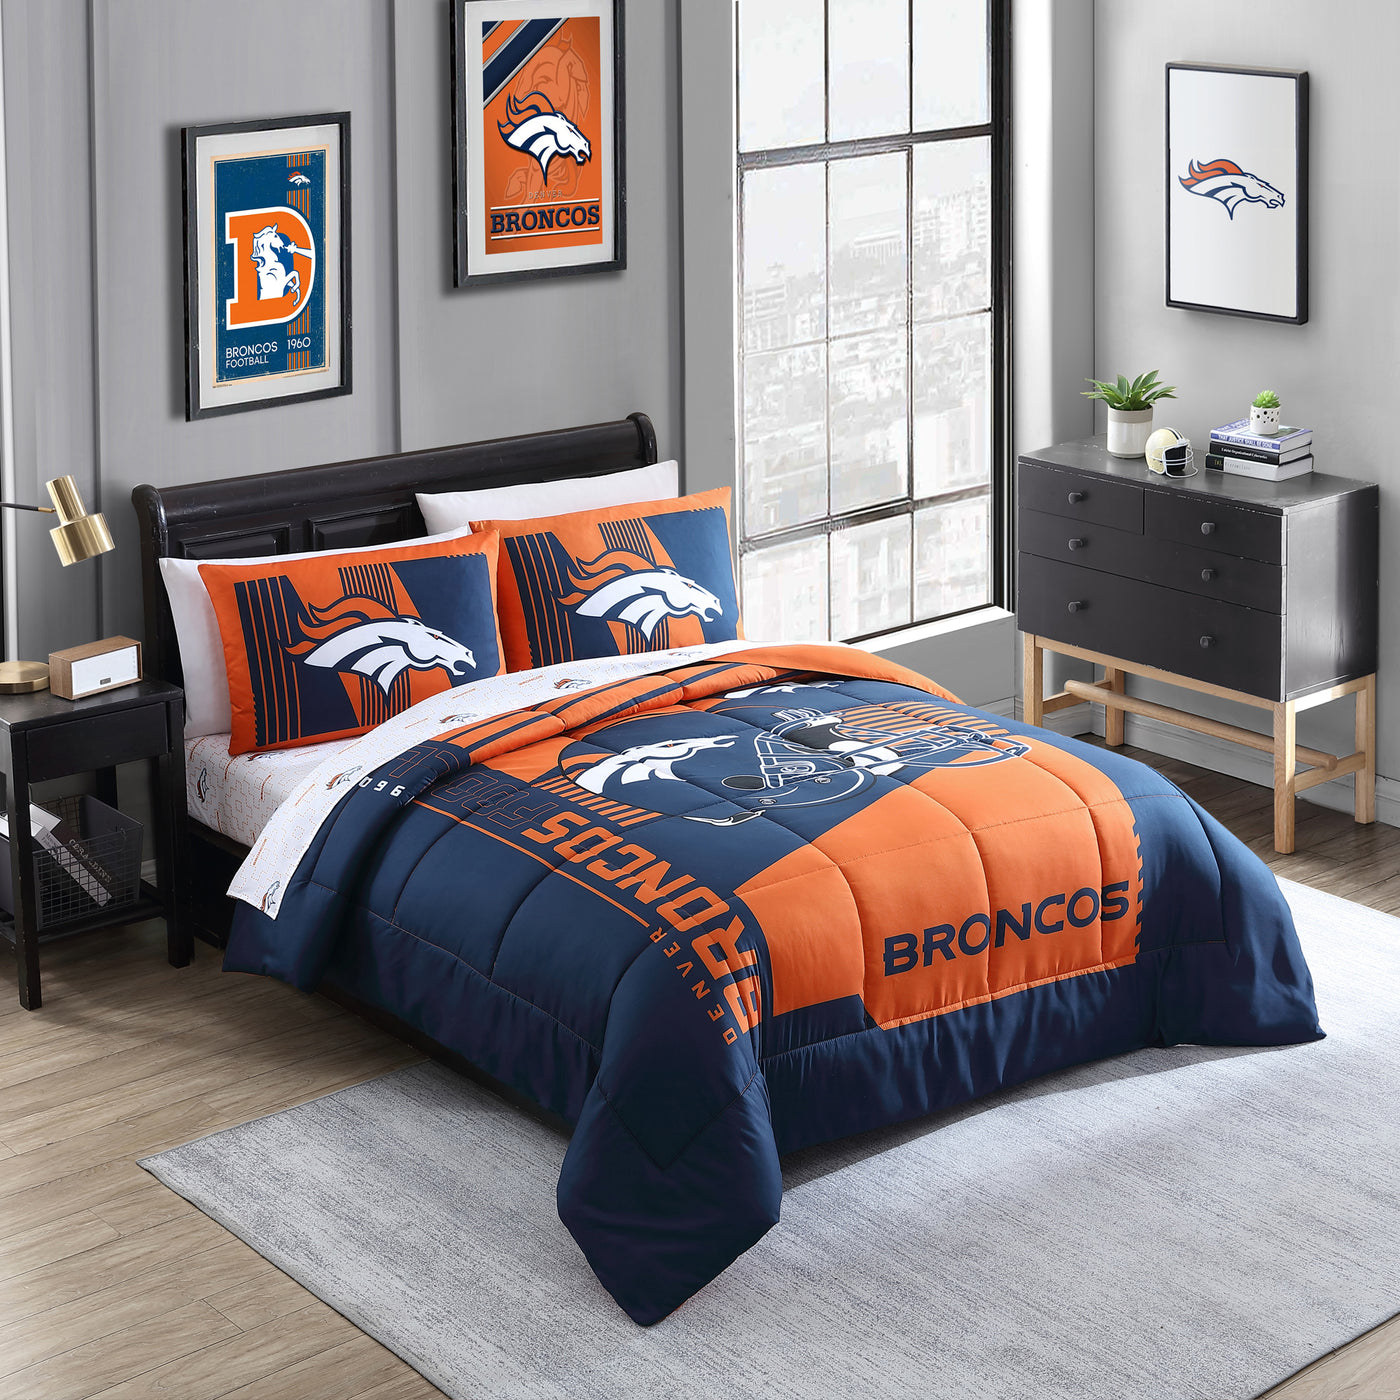 Denver Broncos Status Bed In A Bag Queen